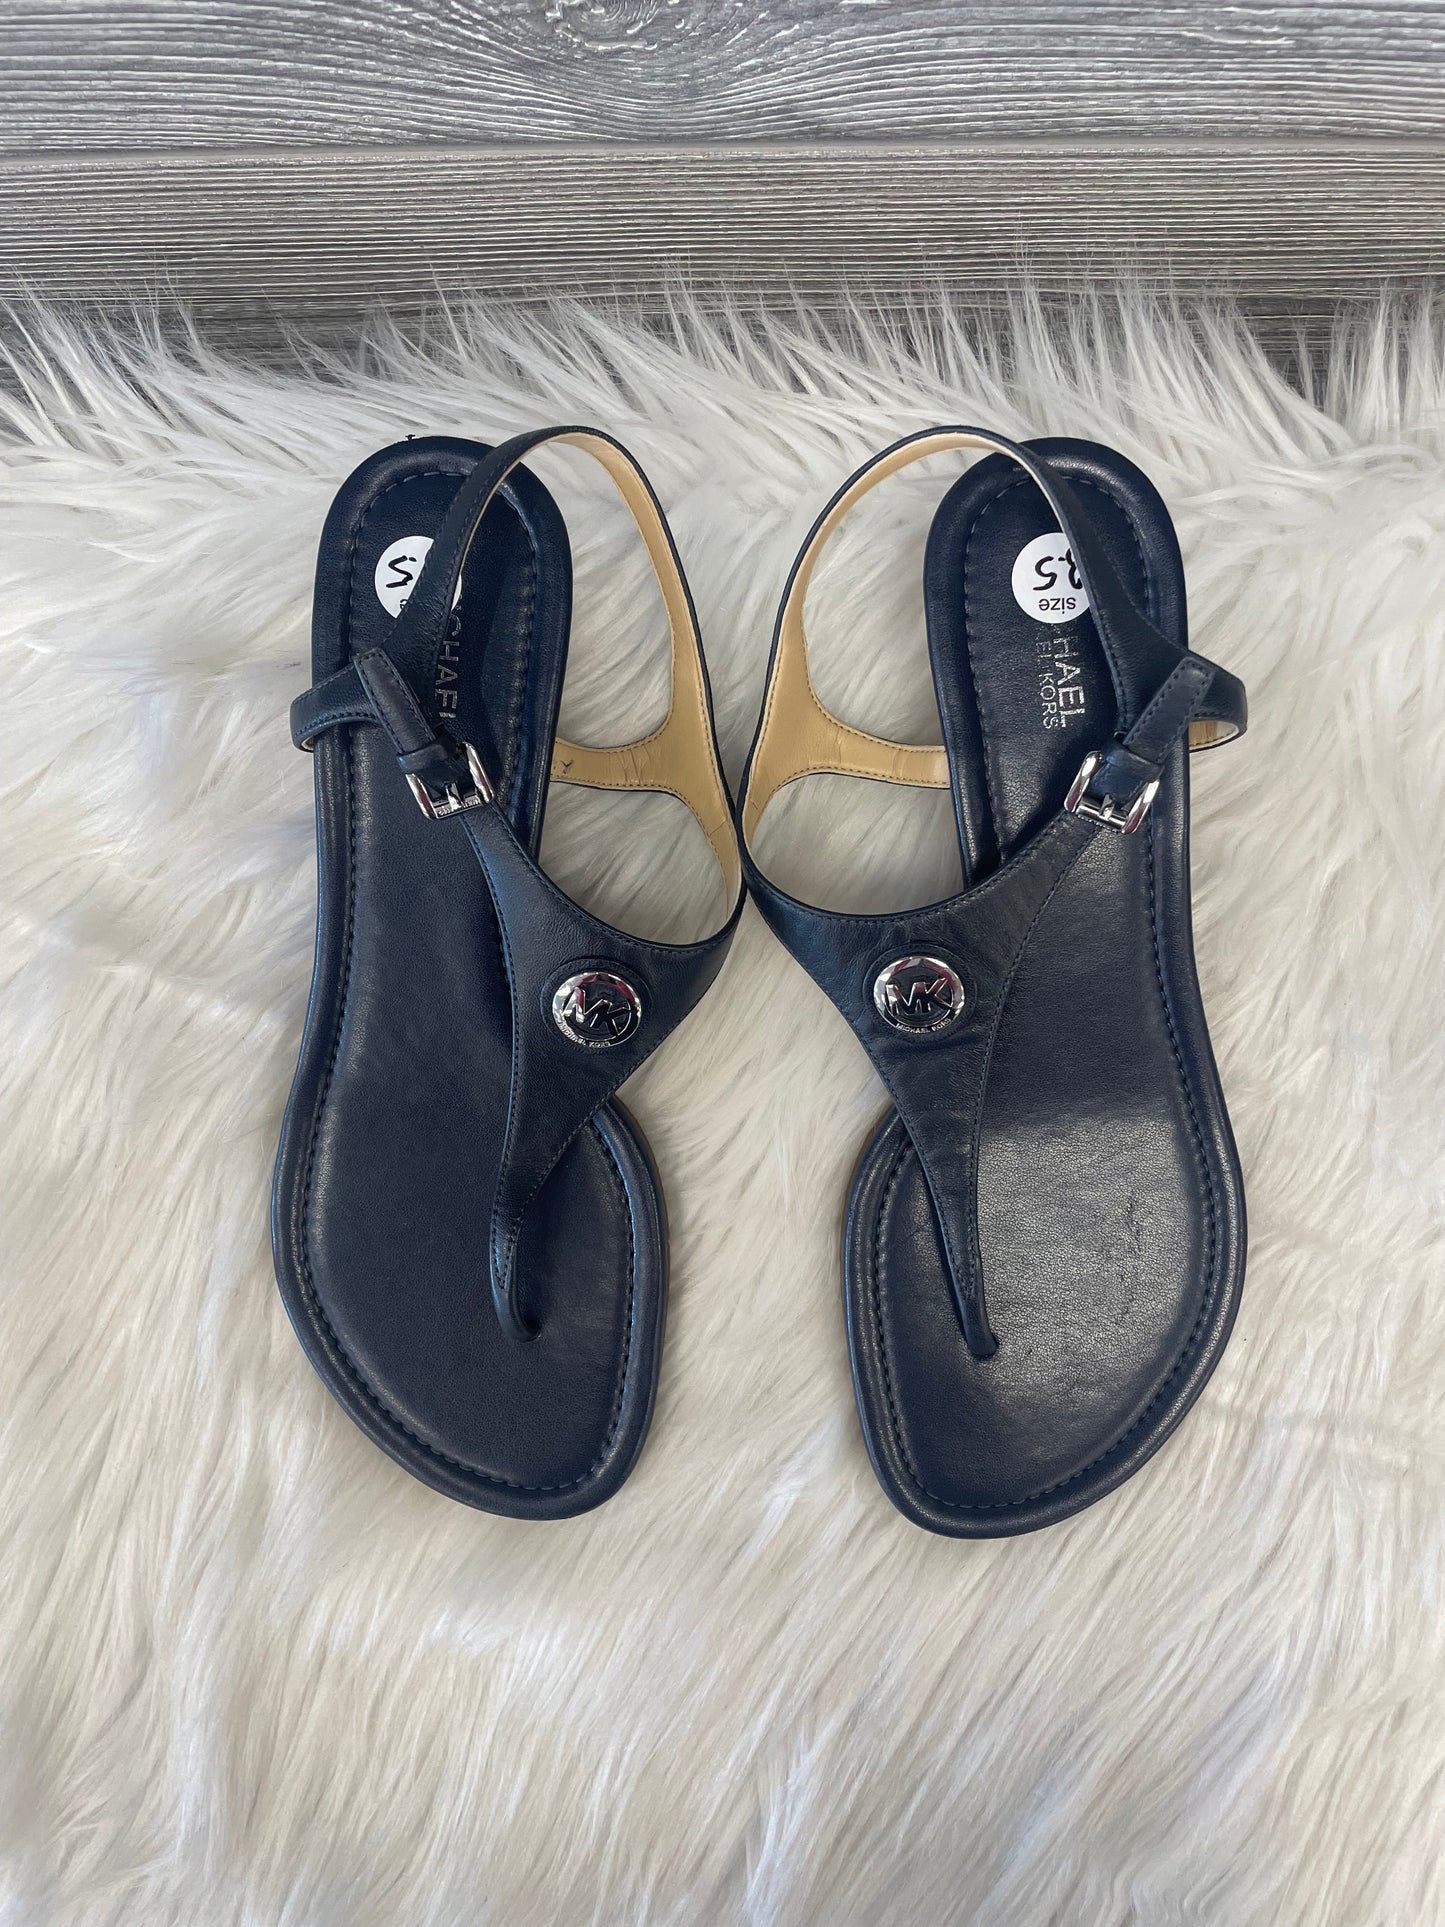 Sandals Heels Wedge By Michael Kors  Size: 8.5